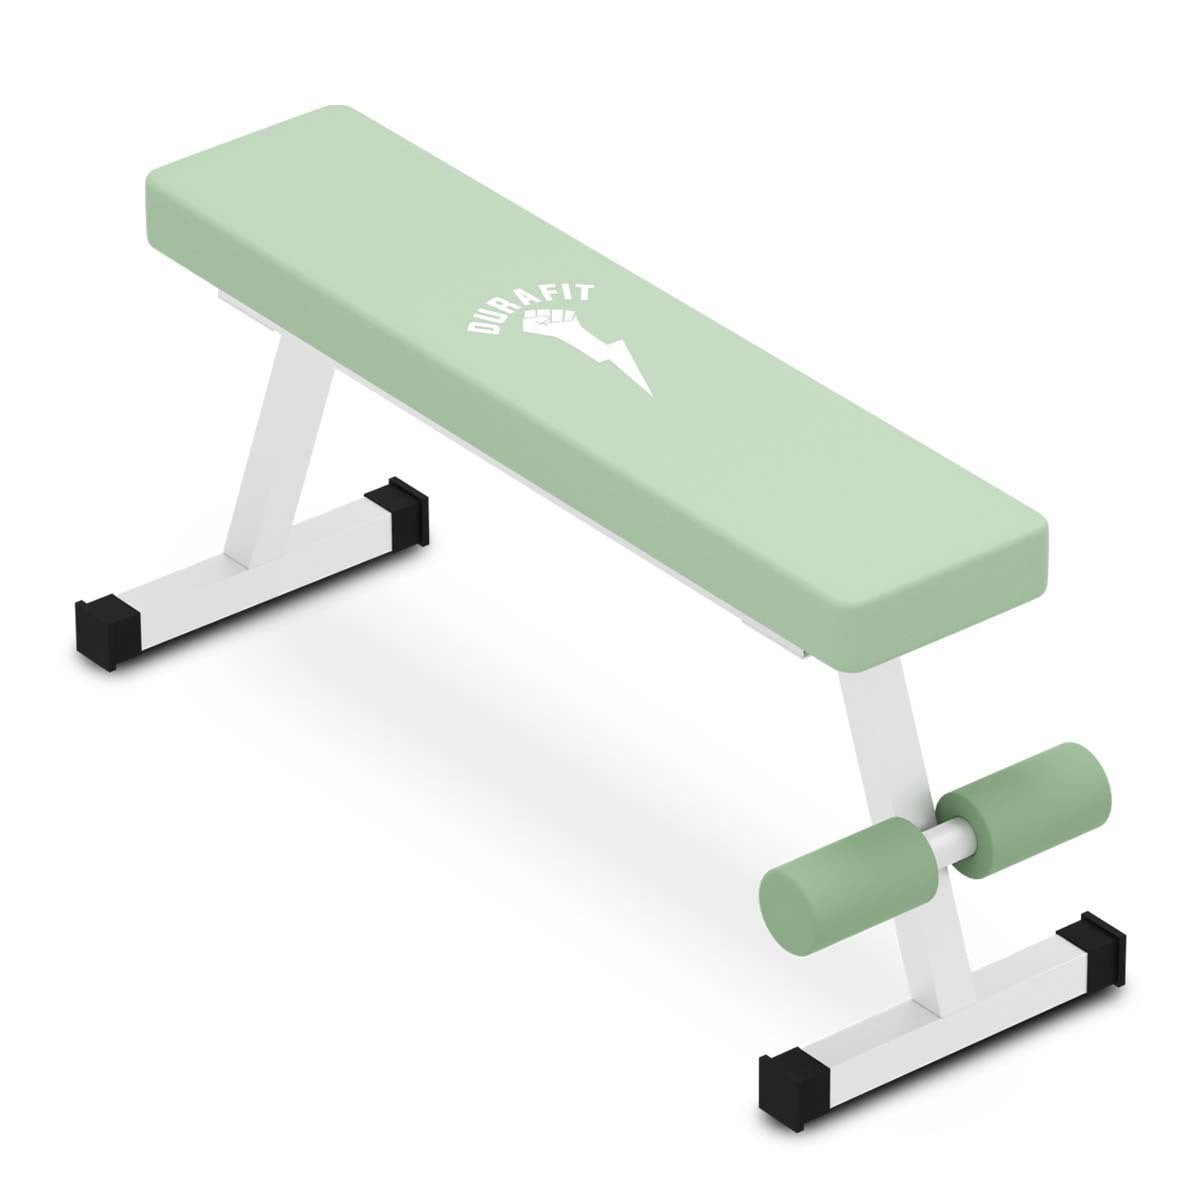 Durafit Simple Flat bench SB01-Green